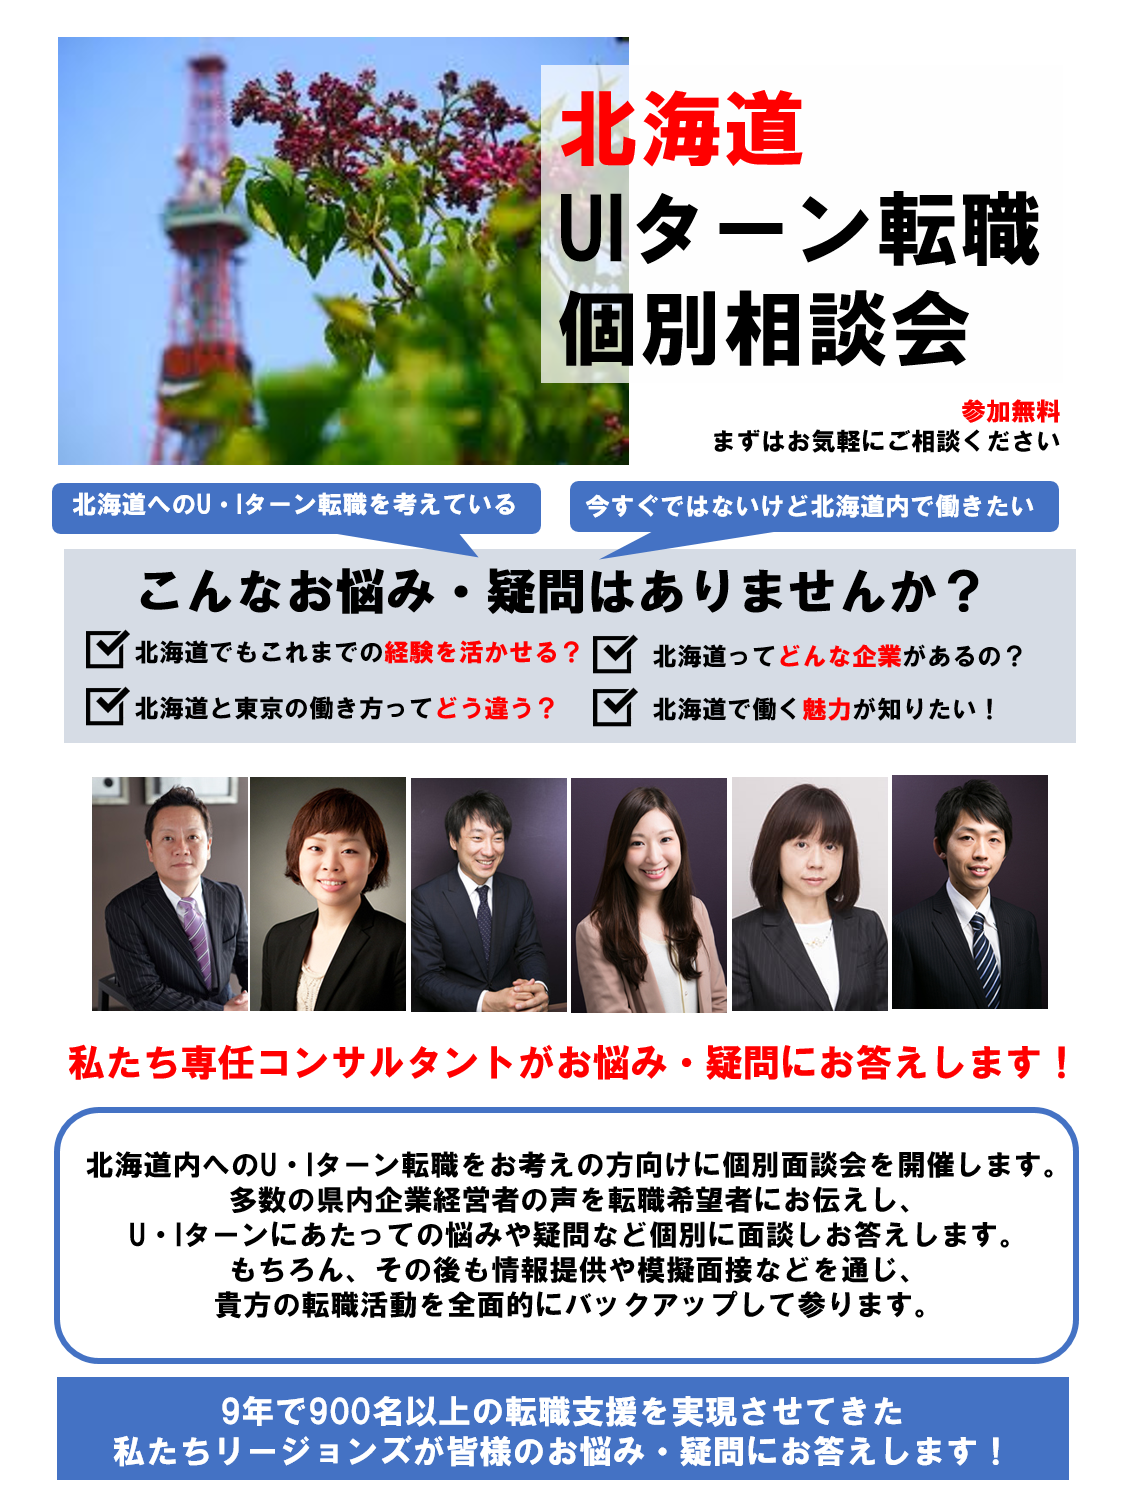 http://www.regional.co.jp/career_mt/0804.png